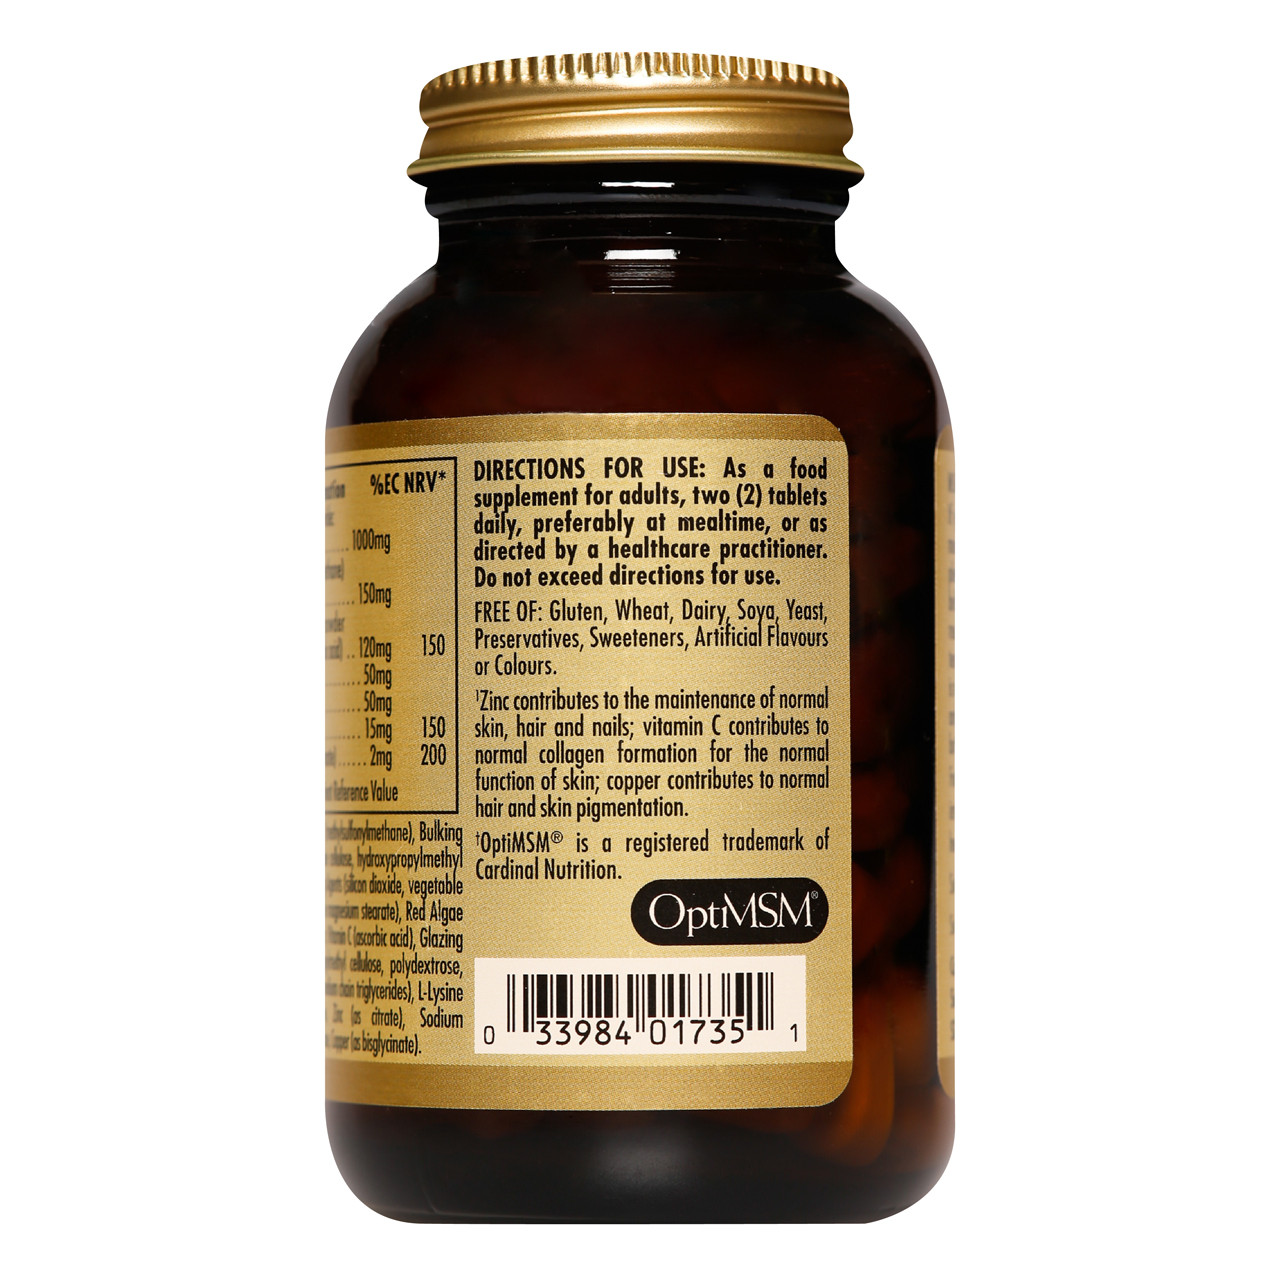 Skin, Nails and Hair Tablets | Solgar Gold Standard Vitamins & Supplements